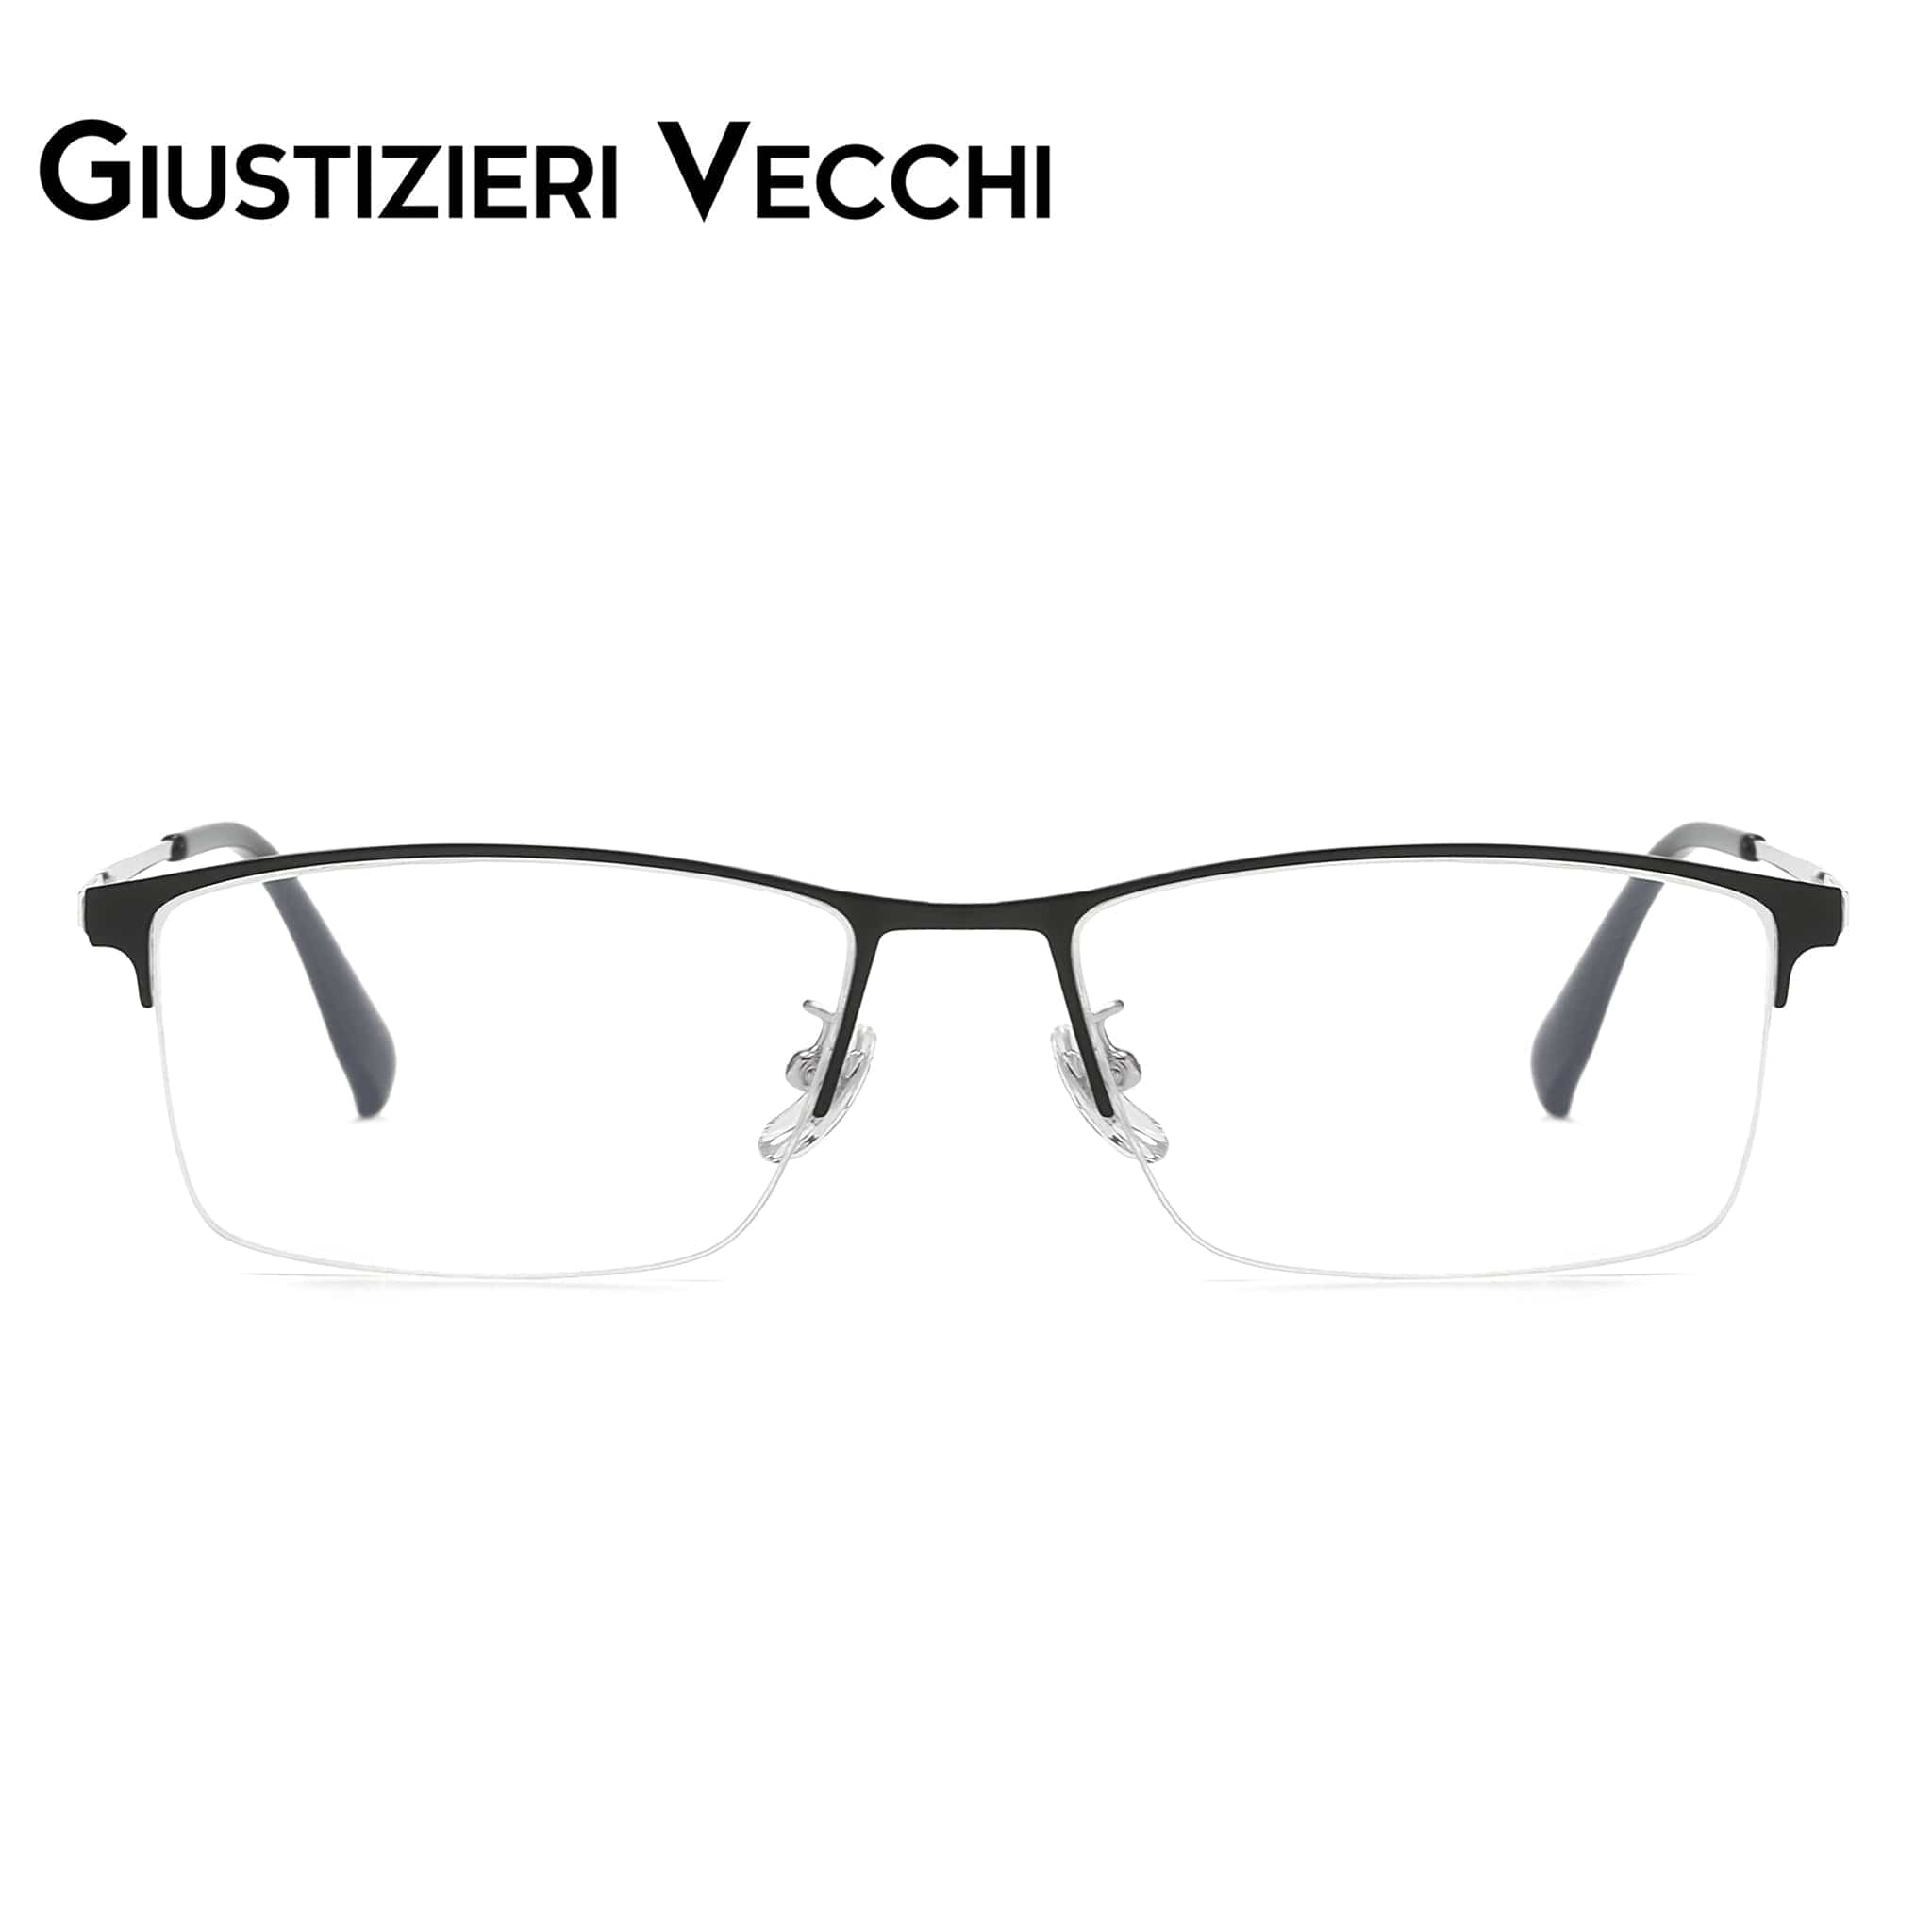 GIUSTIZIERI VECCHI Eyeglasses Medium / Black with Silver Thunderbolt Duo